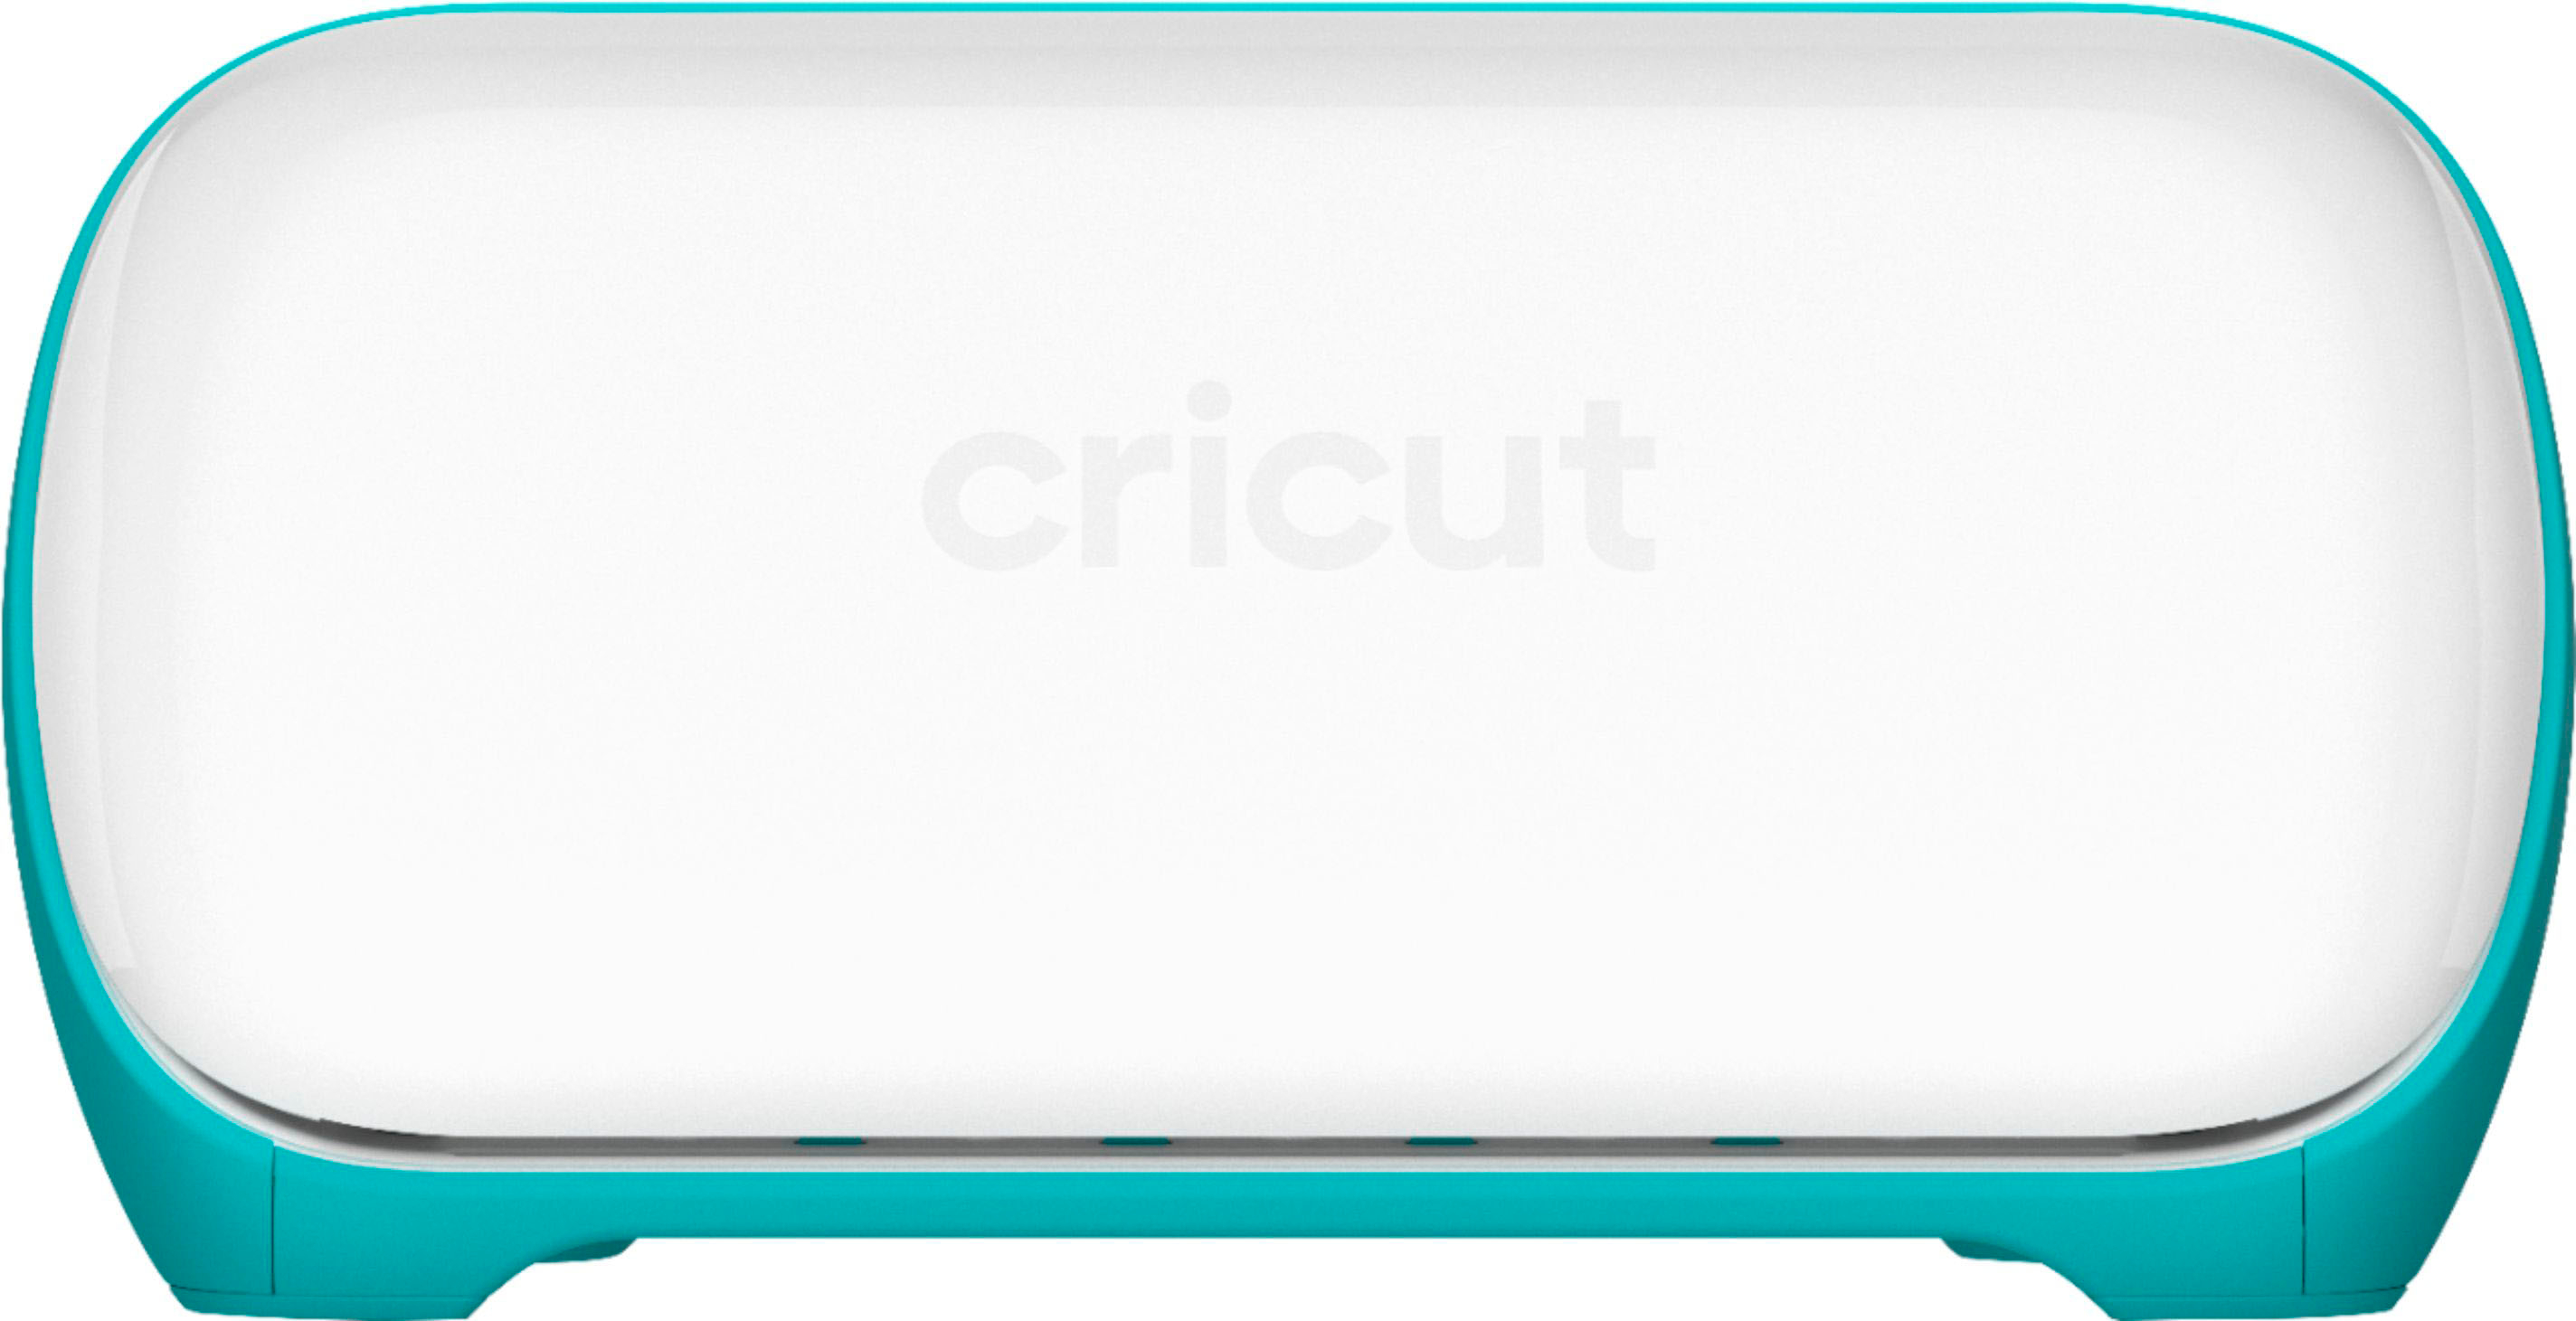 Costco] Cricut Joy Starter Kit - Clearance price of $179.97 (YMMV